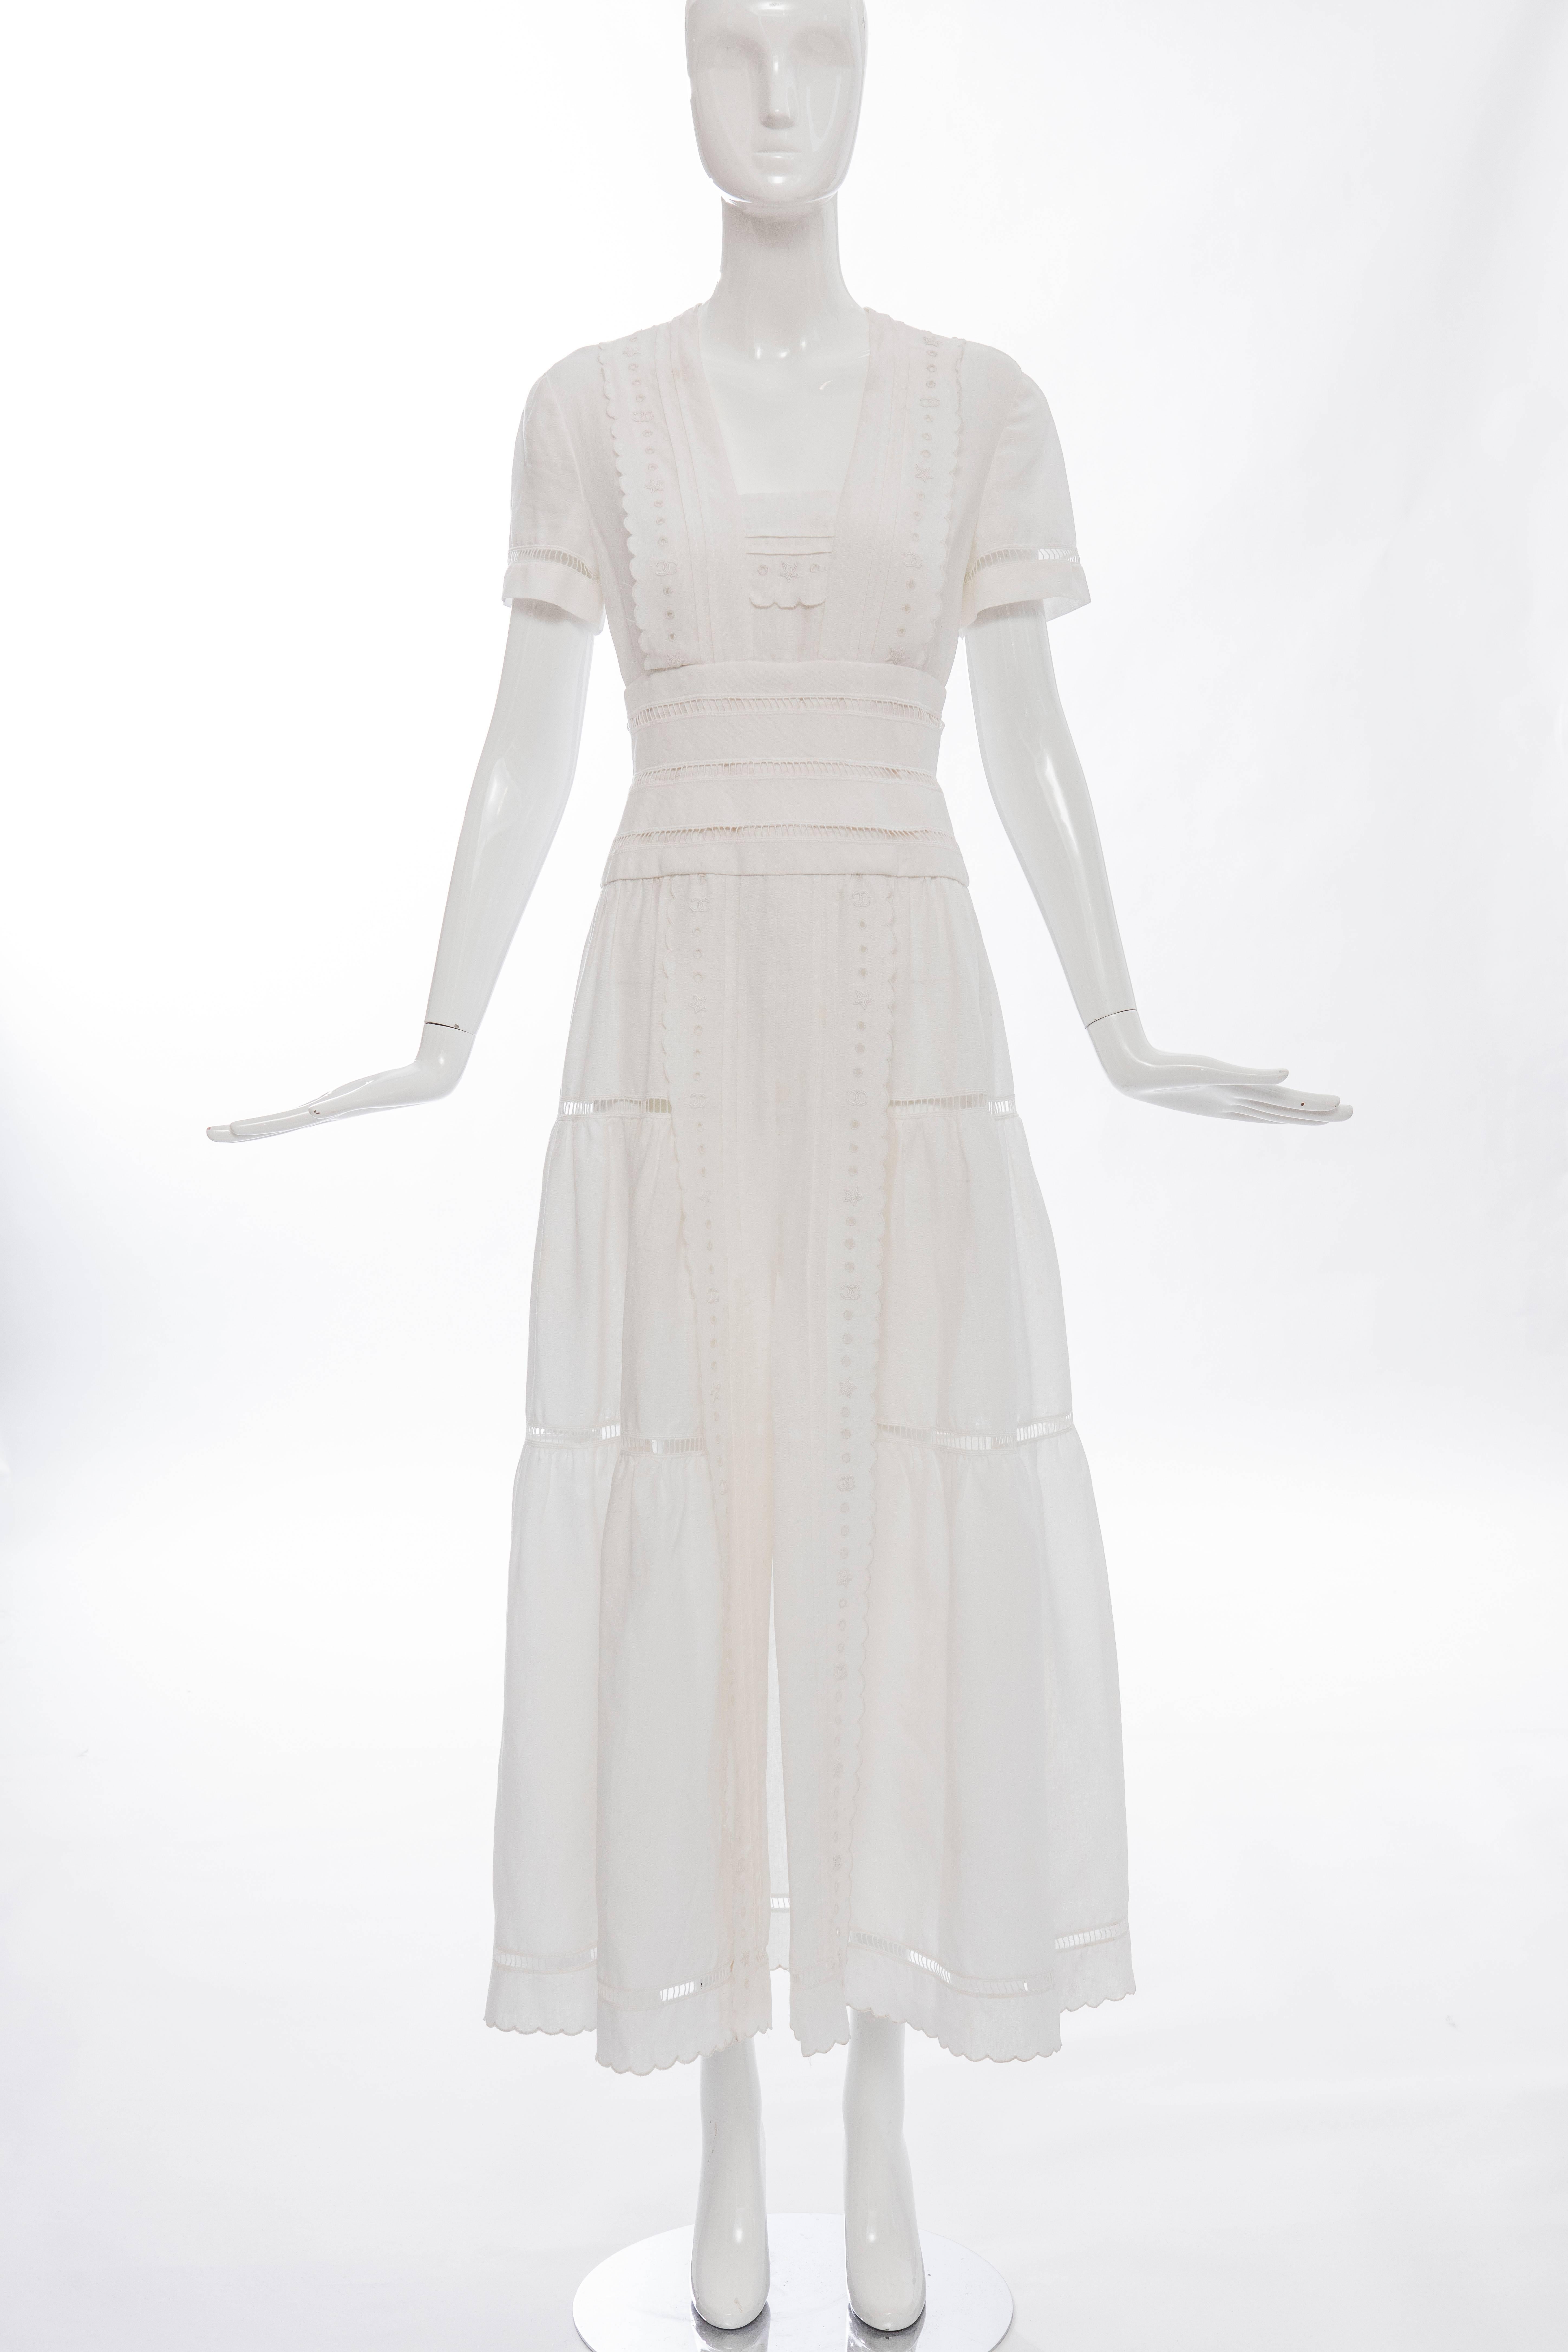 Chanel, circa 1980's short sleeve, back zip whitework embroidered linen dress.

FR. 38
US. 4

Bust 32, Waist 26, Hips 44, Length 55